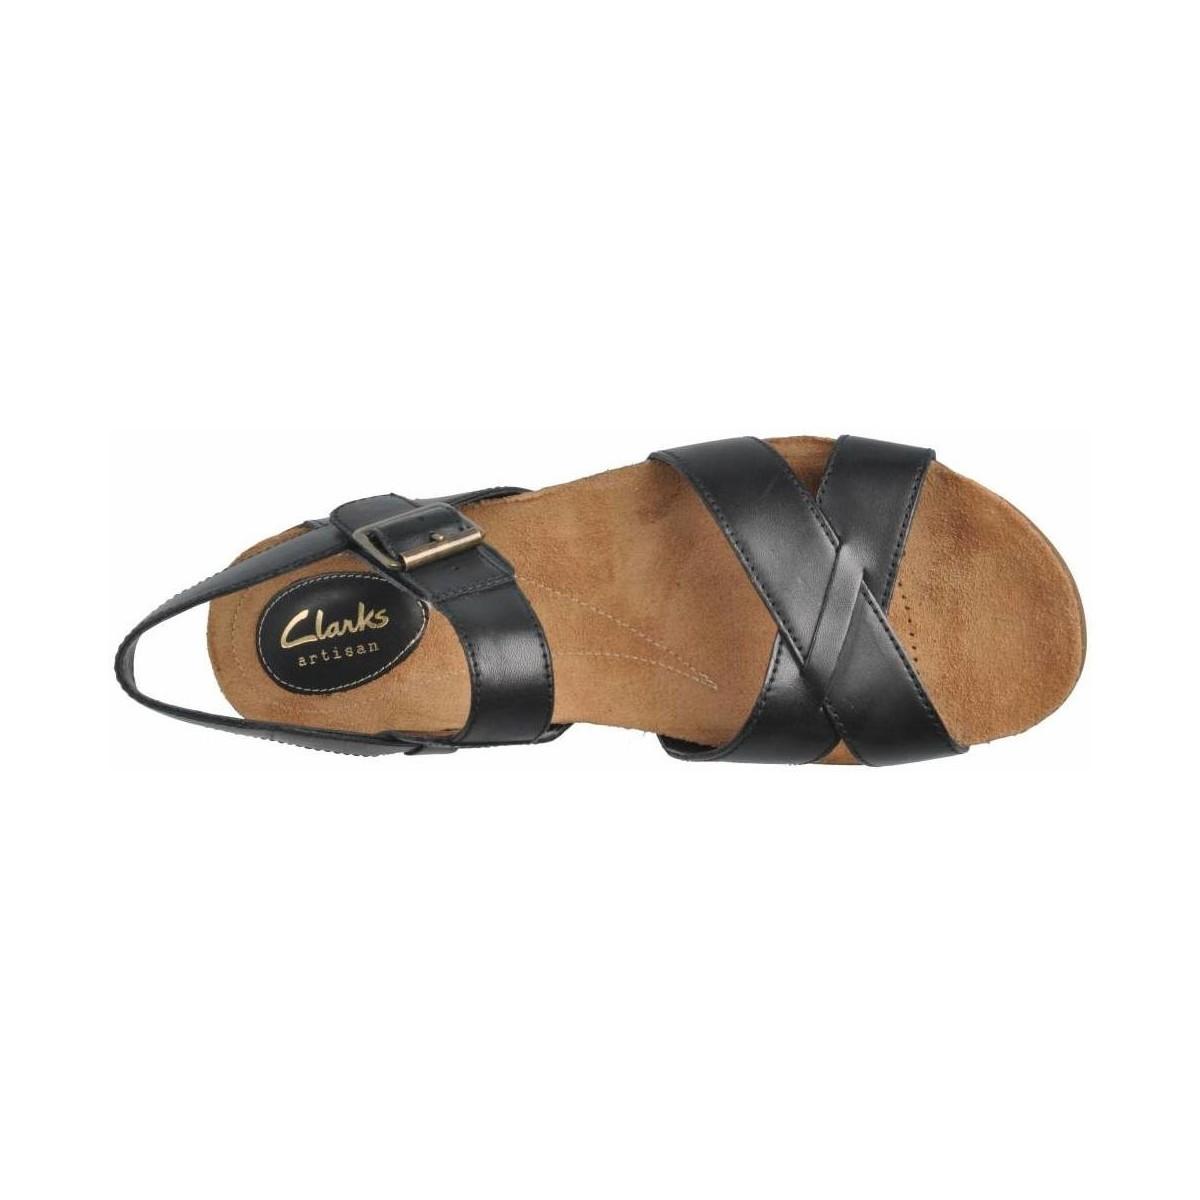 clarks raffi scent flat sandals